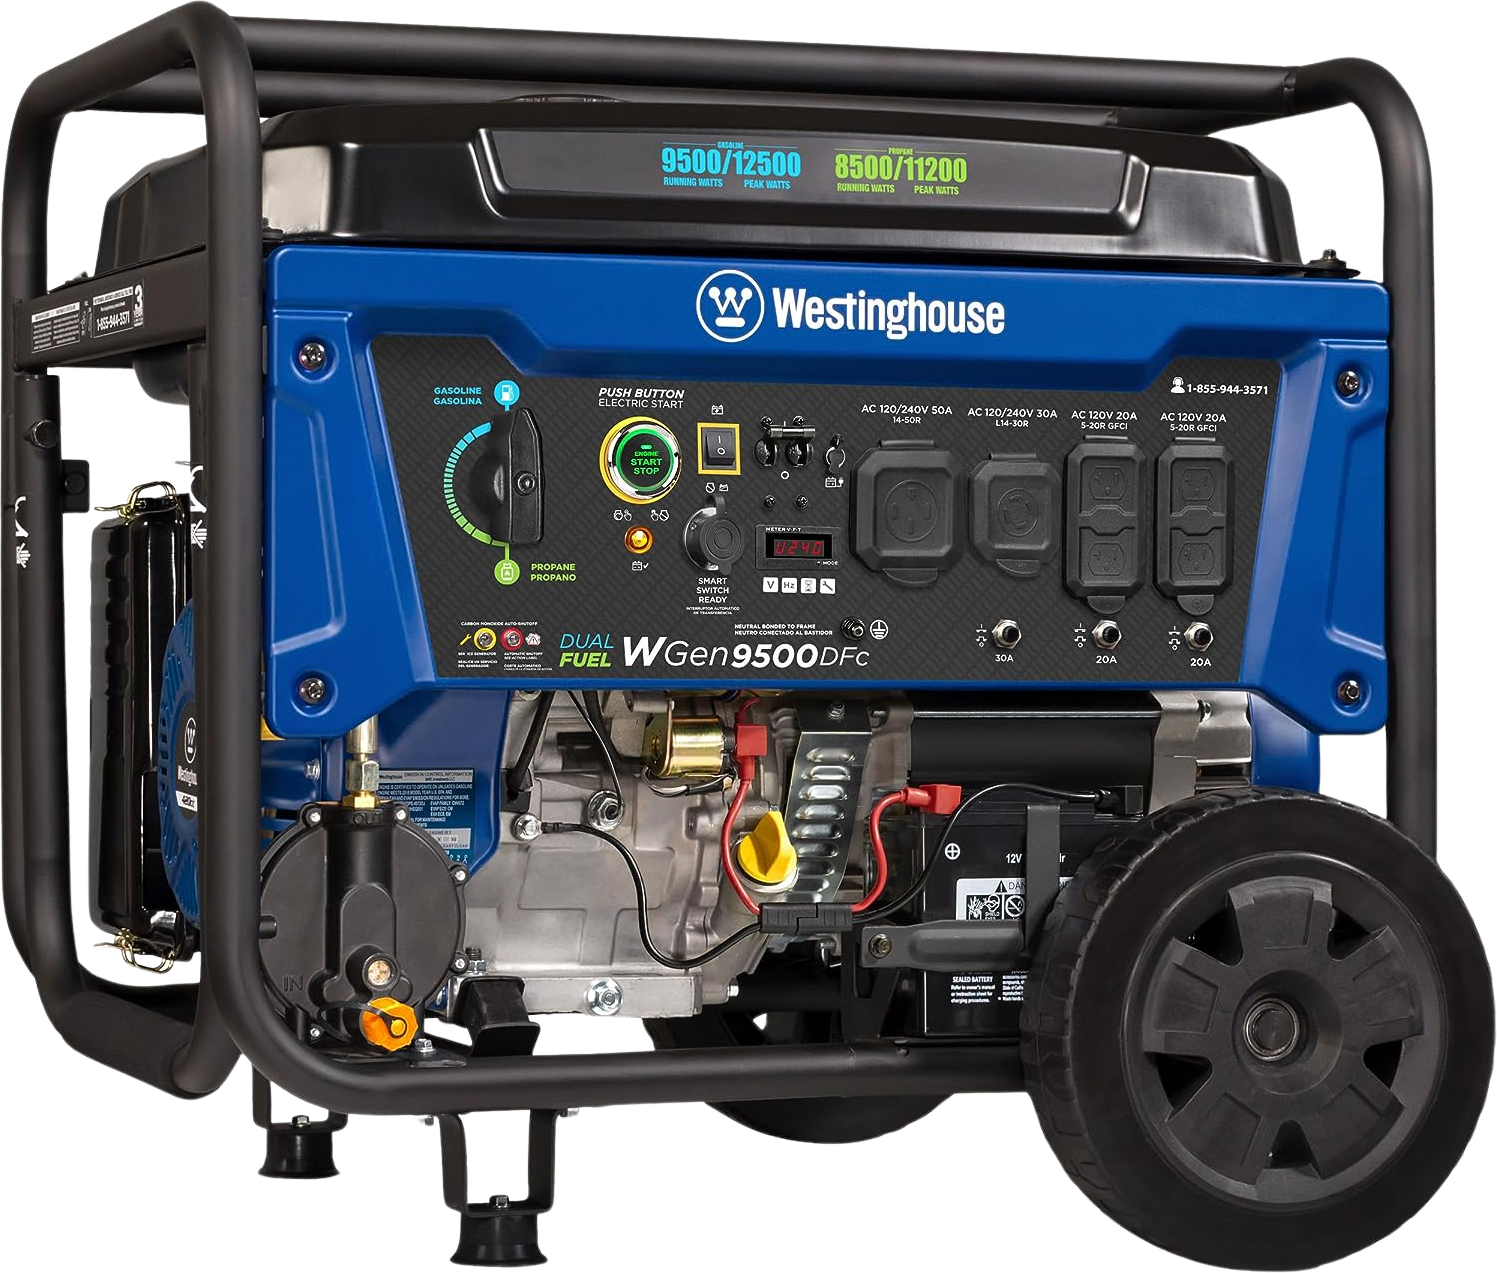 Westinghouse WGen9500DFc Generator 9500W/12500W 50 Amp Remote Start Dual Fuel with CO Sensor New